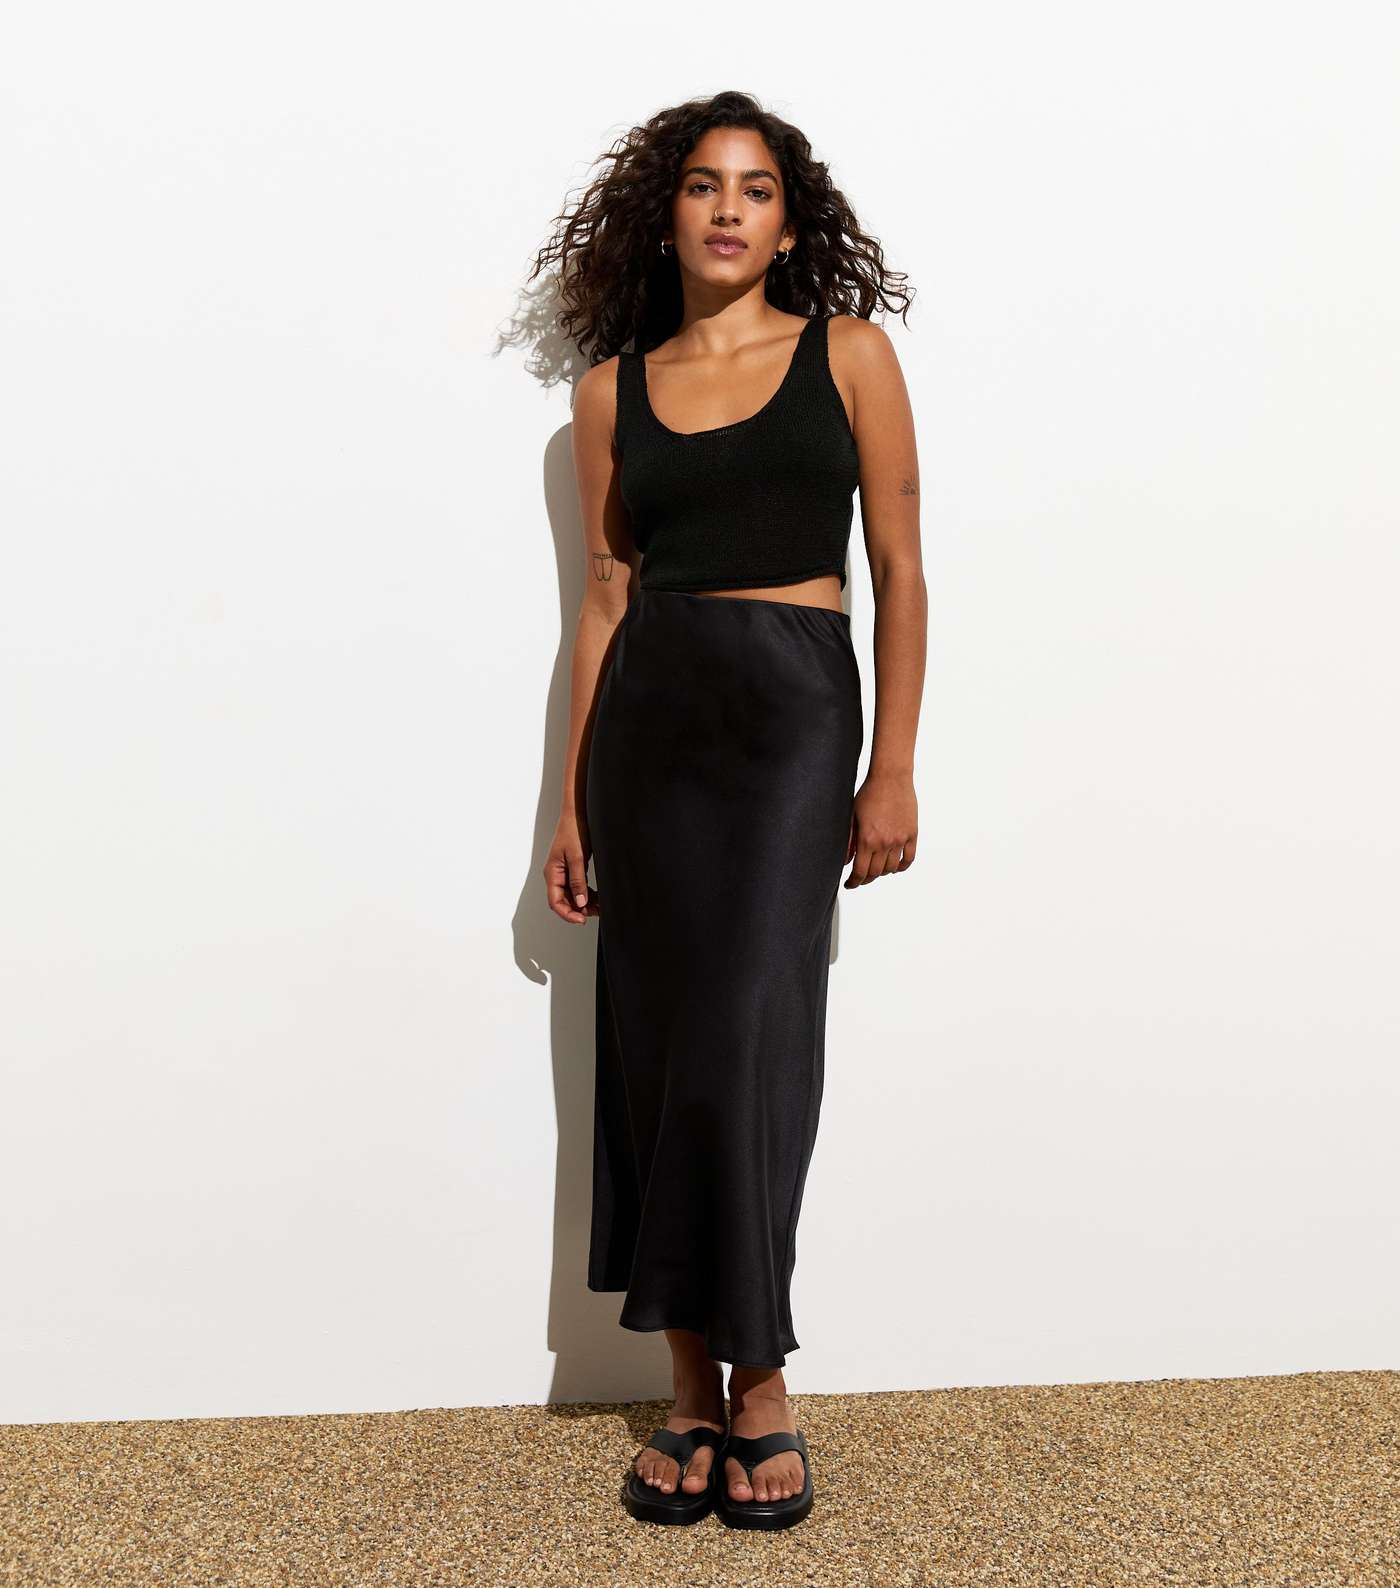 Petite Black Satin Bias Cut Midi Skirt